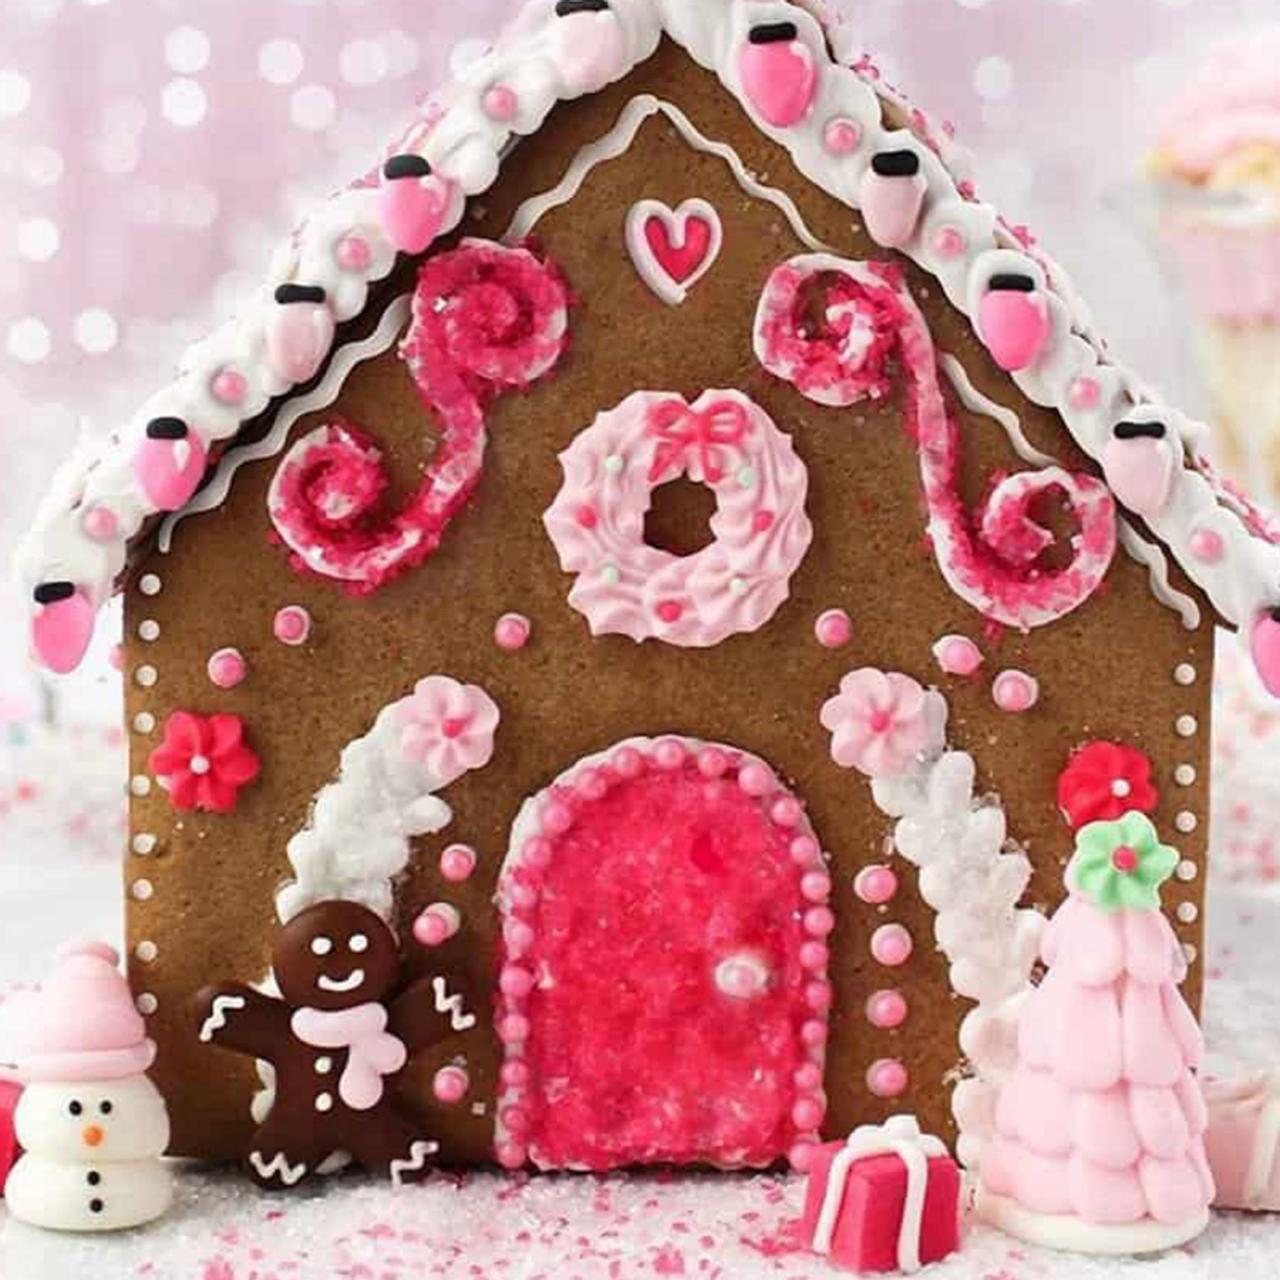 Nordic Ware Gingerbread House Bundt Pan : Target